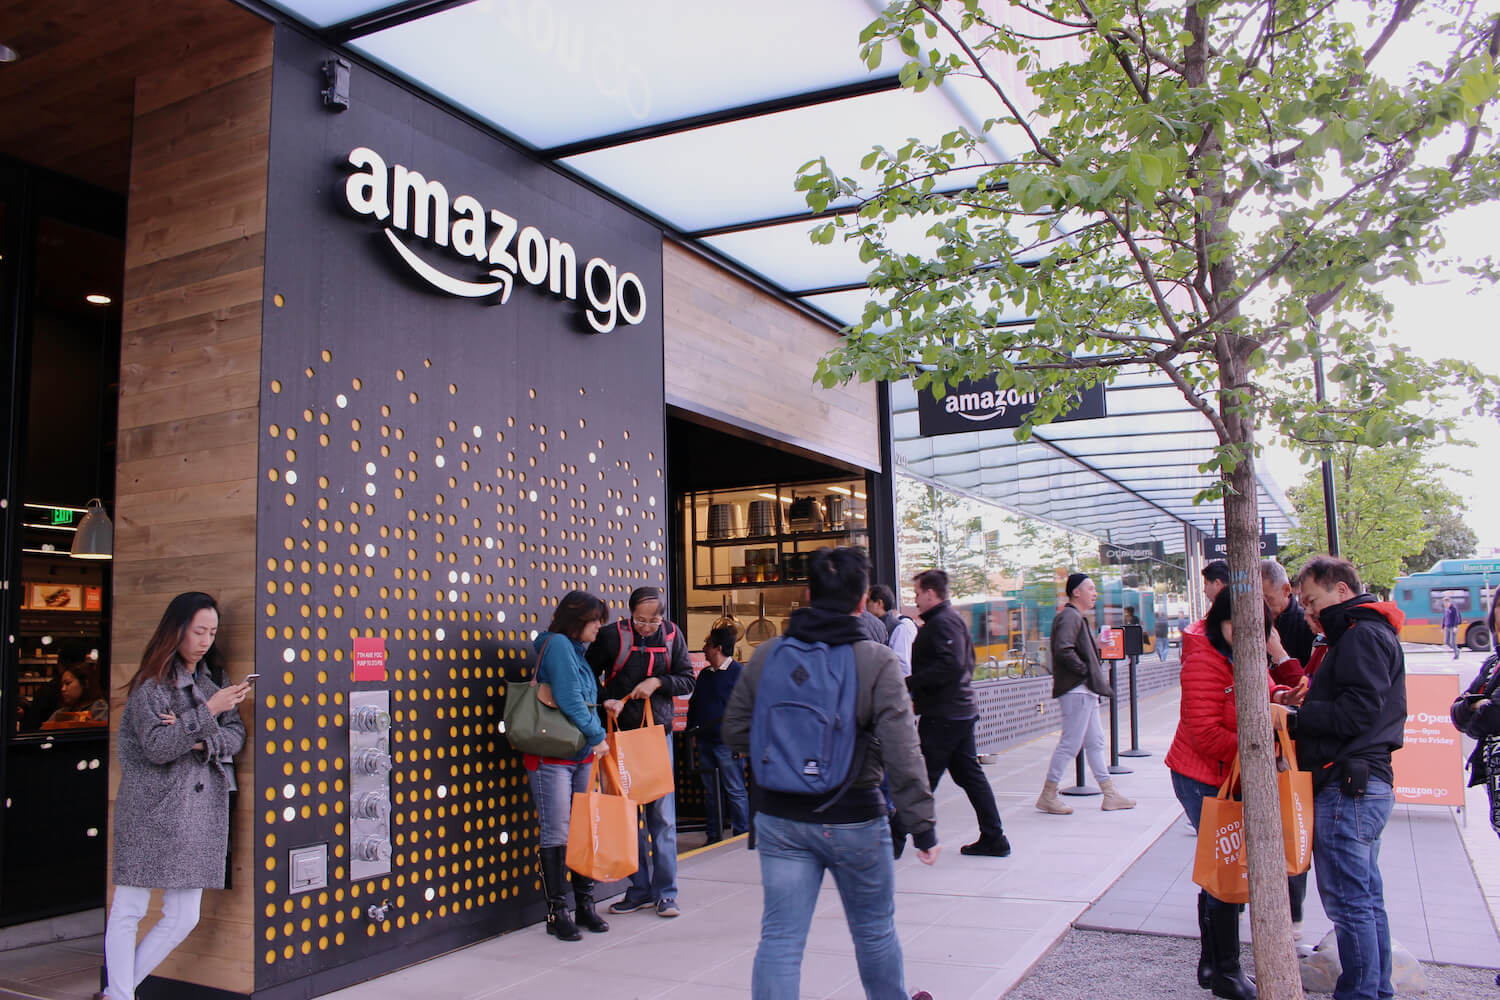 Amazon Go – Cashier-less stores